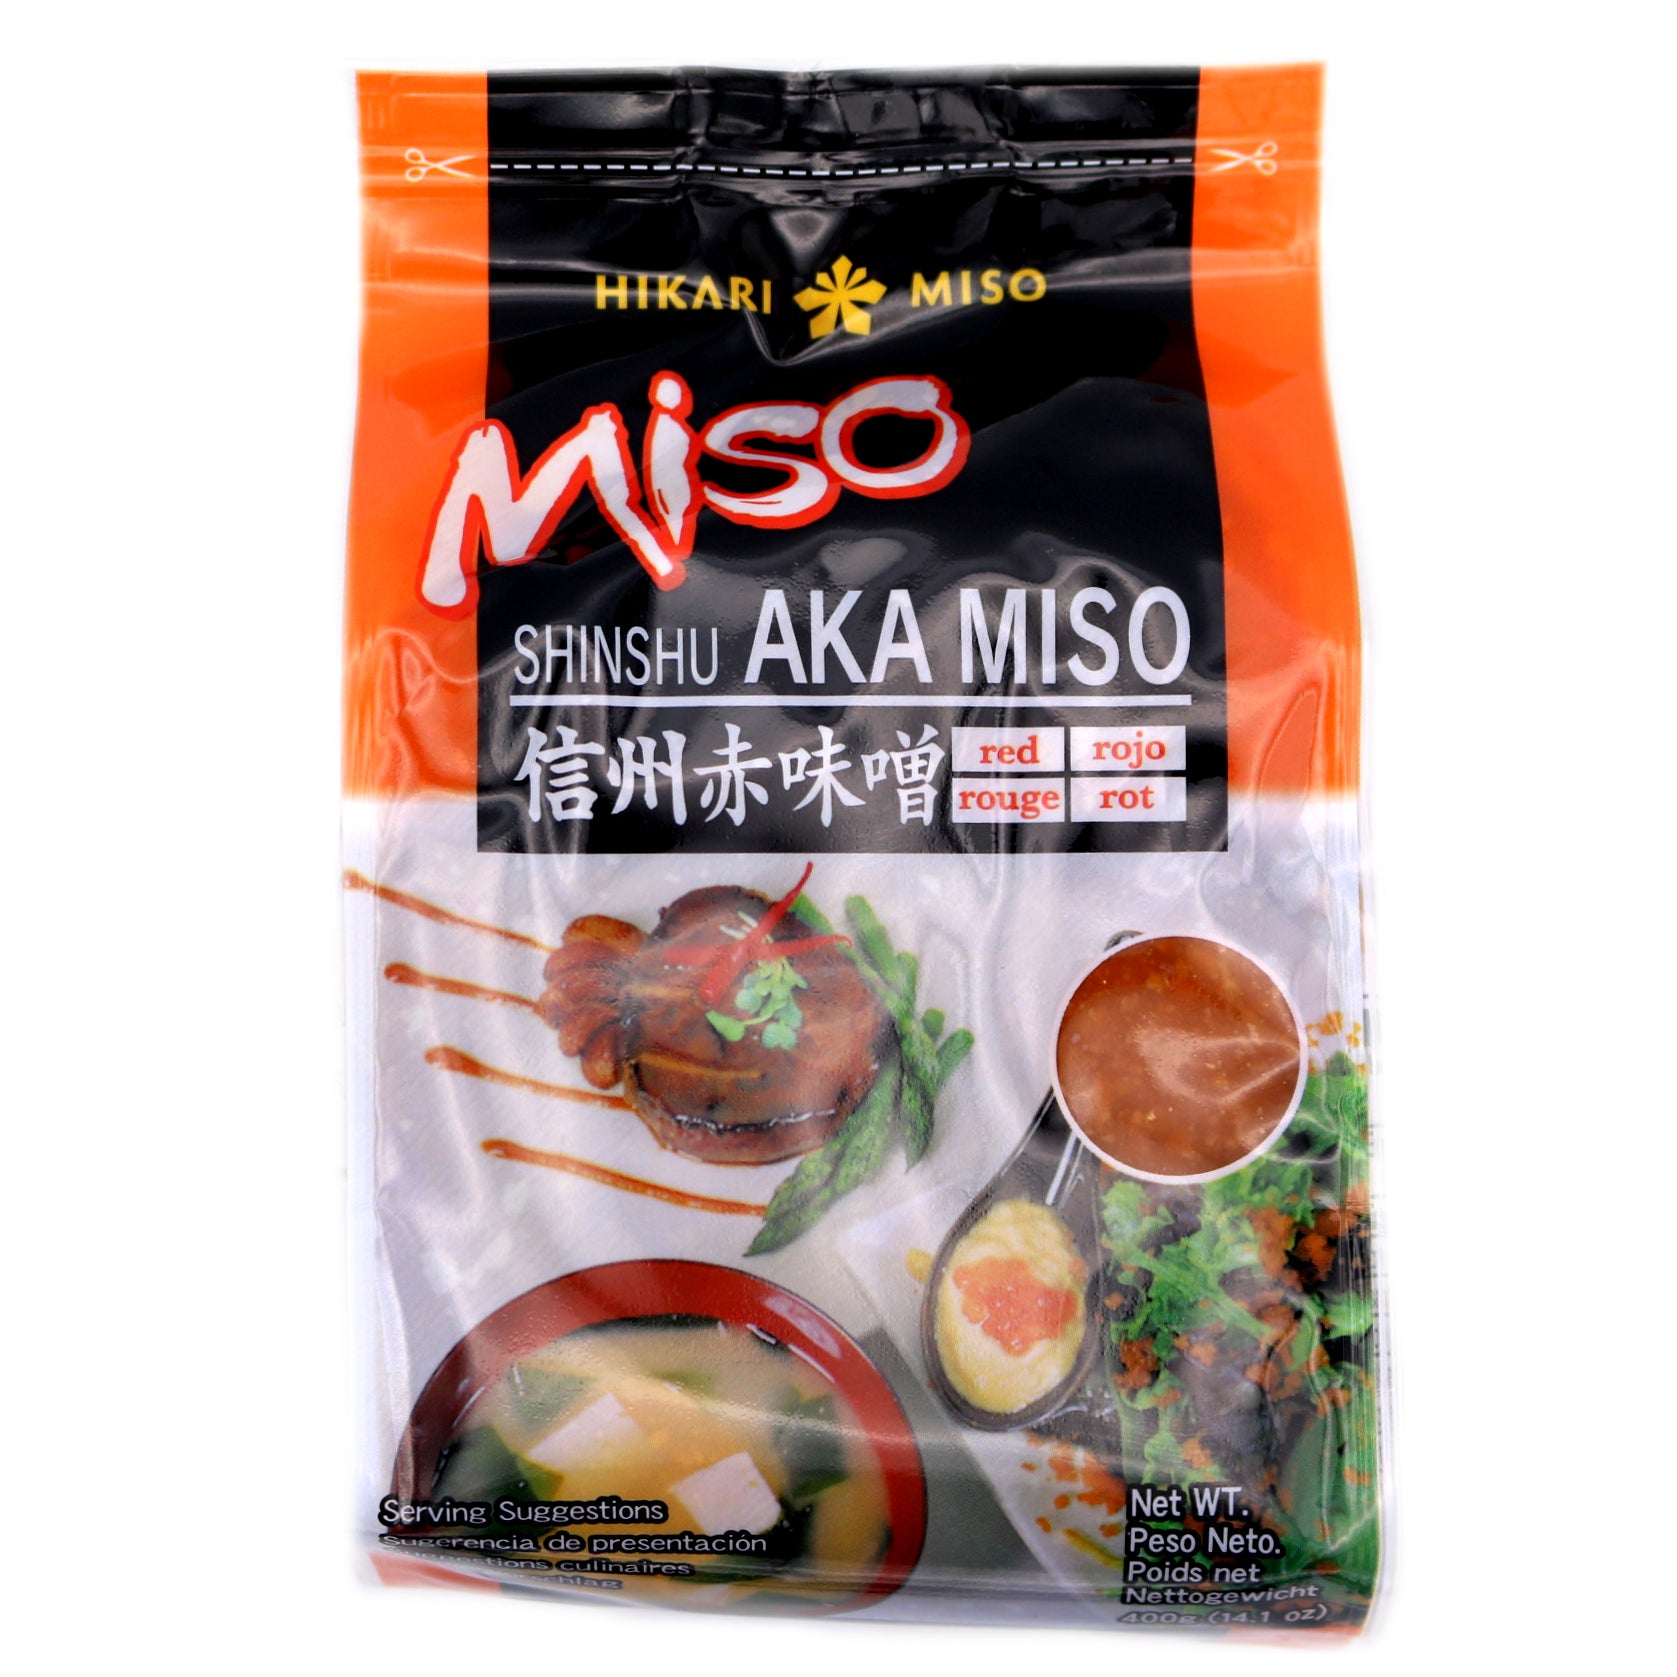 Hikari White Shiro Miso Soybean Paste 400g - Tuk Tuk Mart